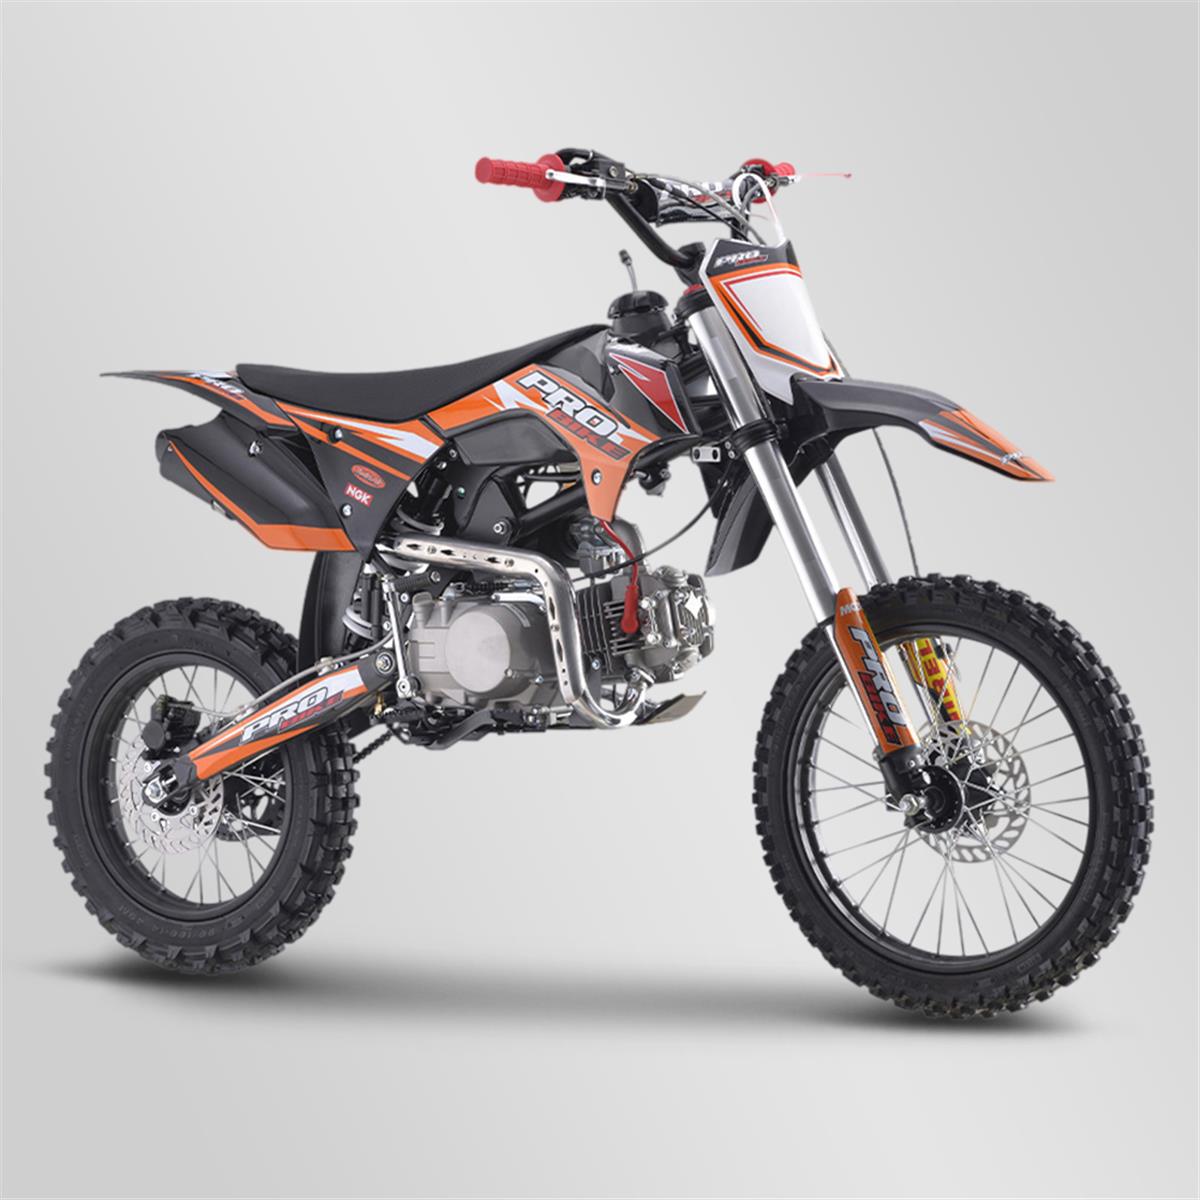 Dirt bike, pit bike Probike 140cc 14/17 orange 2021 | Smallmx - Dirt bike, Pit  bike, Quads, Minimoto